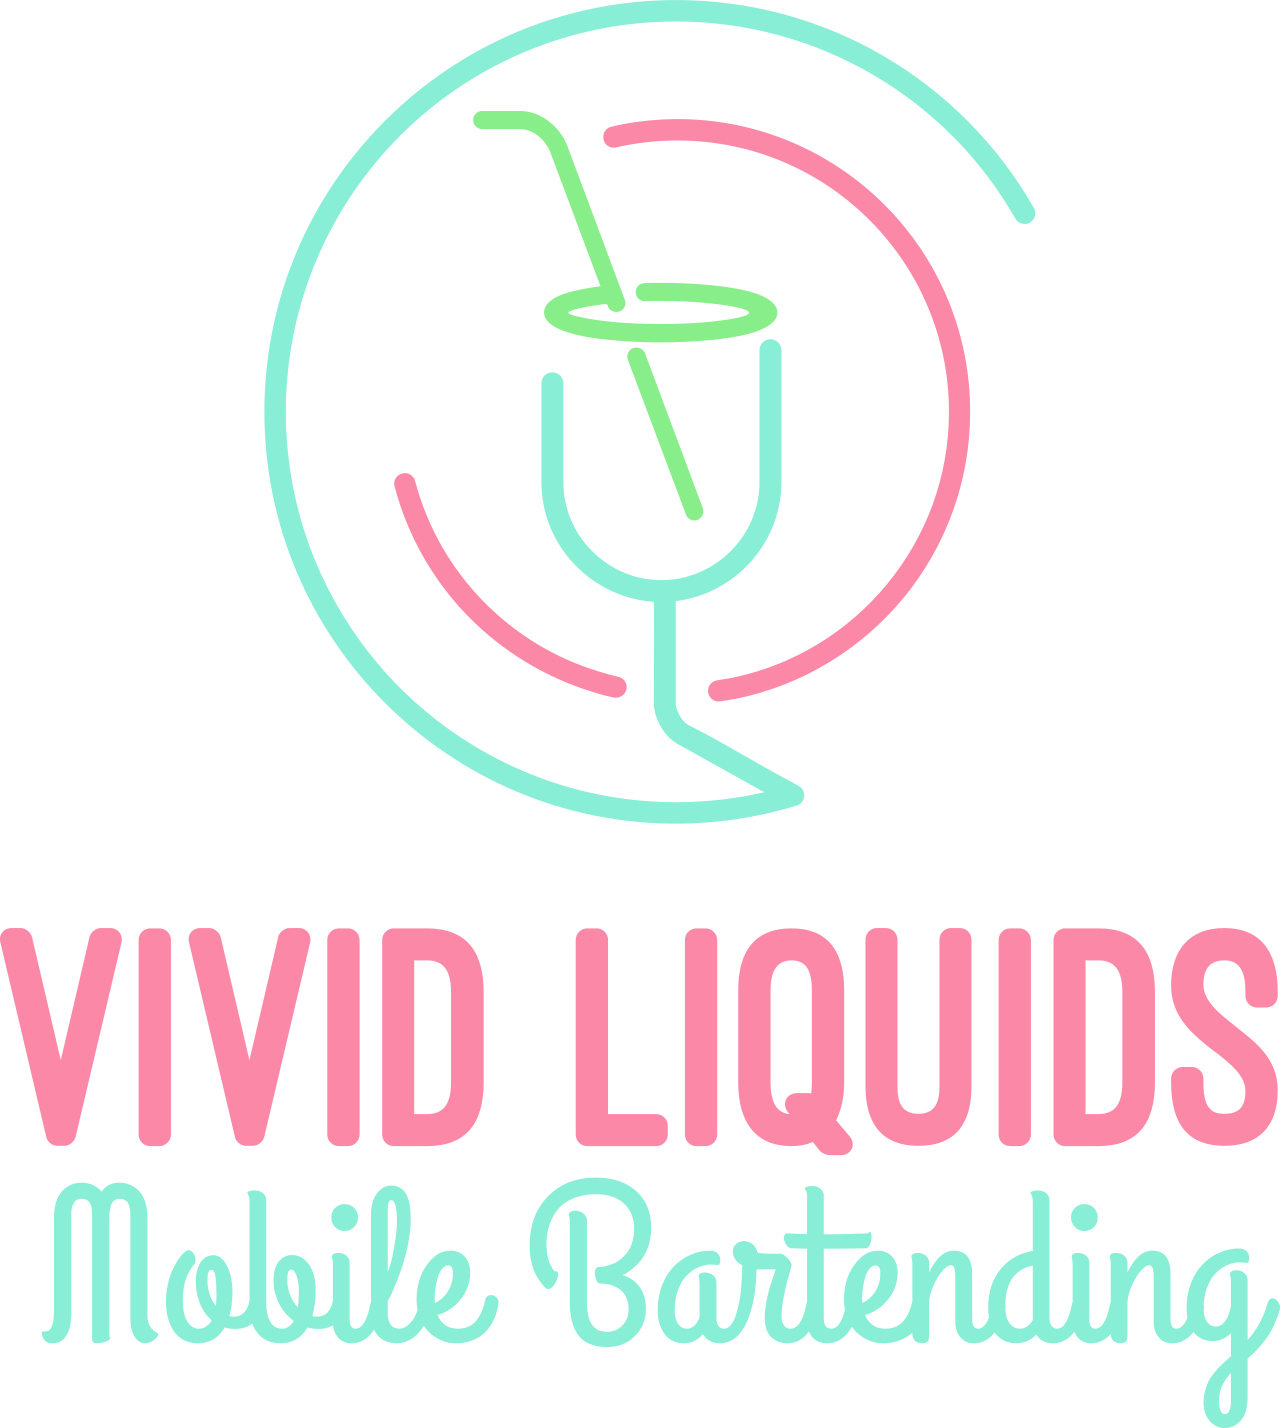 Vivid Liquids's web page